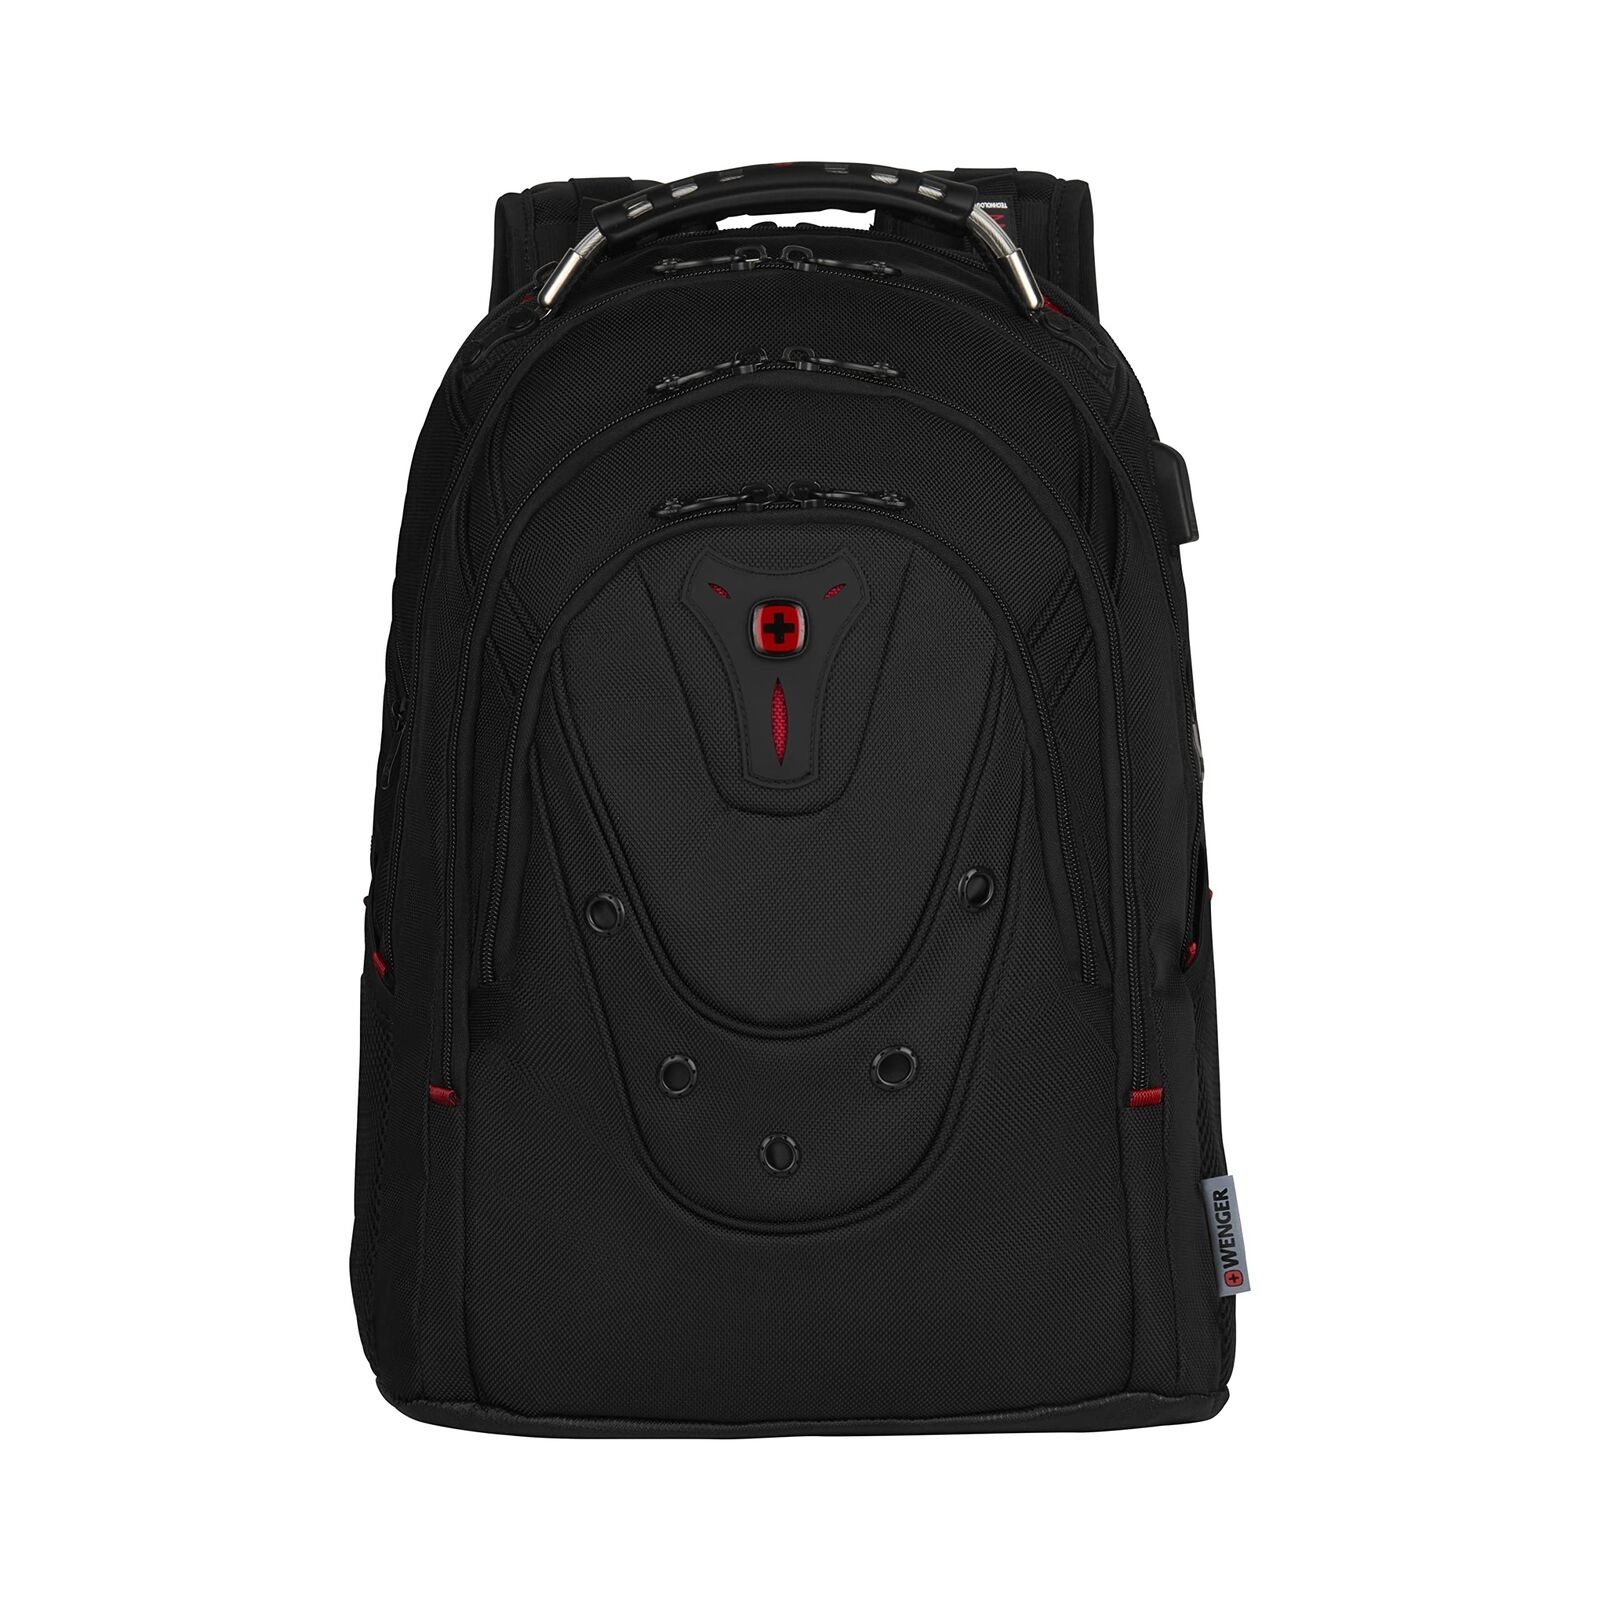 Image of Wenger IBEX Laptop Backpack with Dedicated Tablet Pocket  Shock Absorbing Should